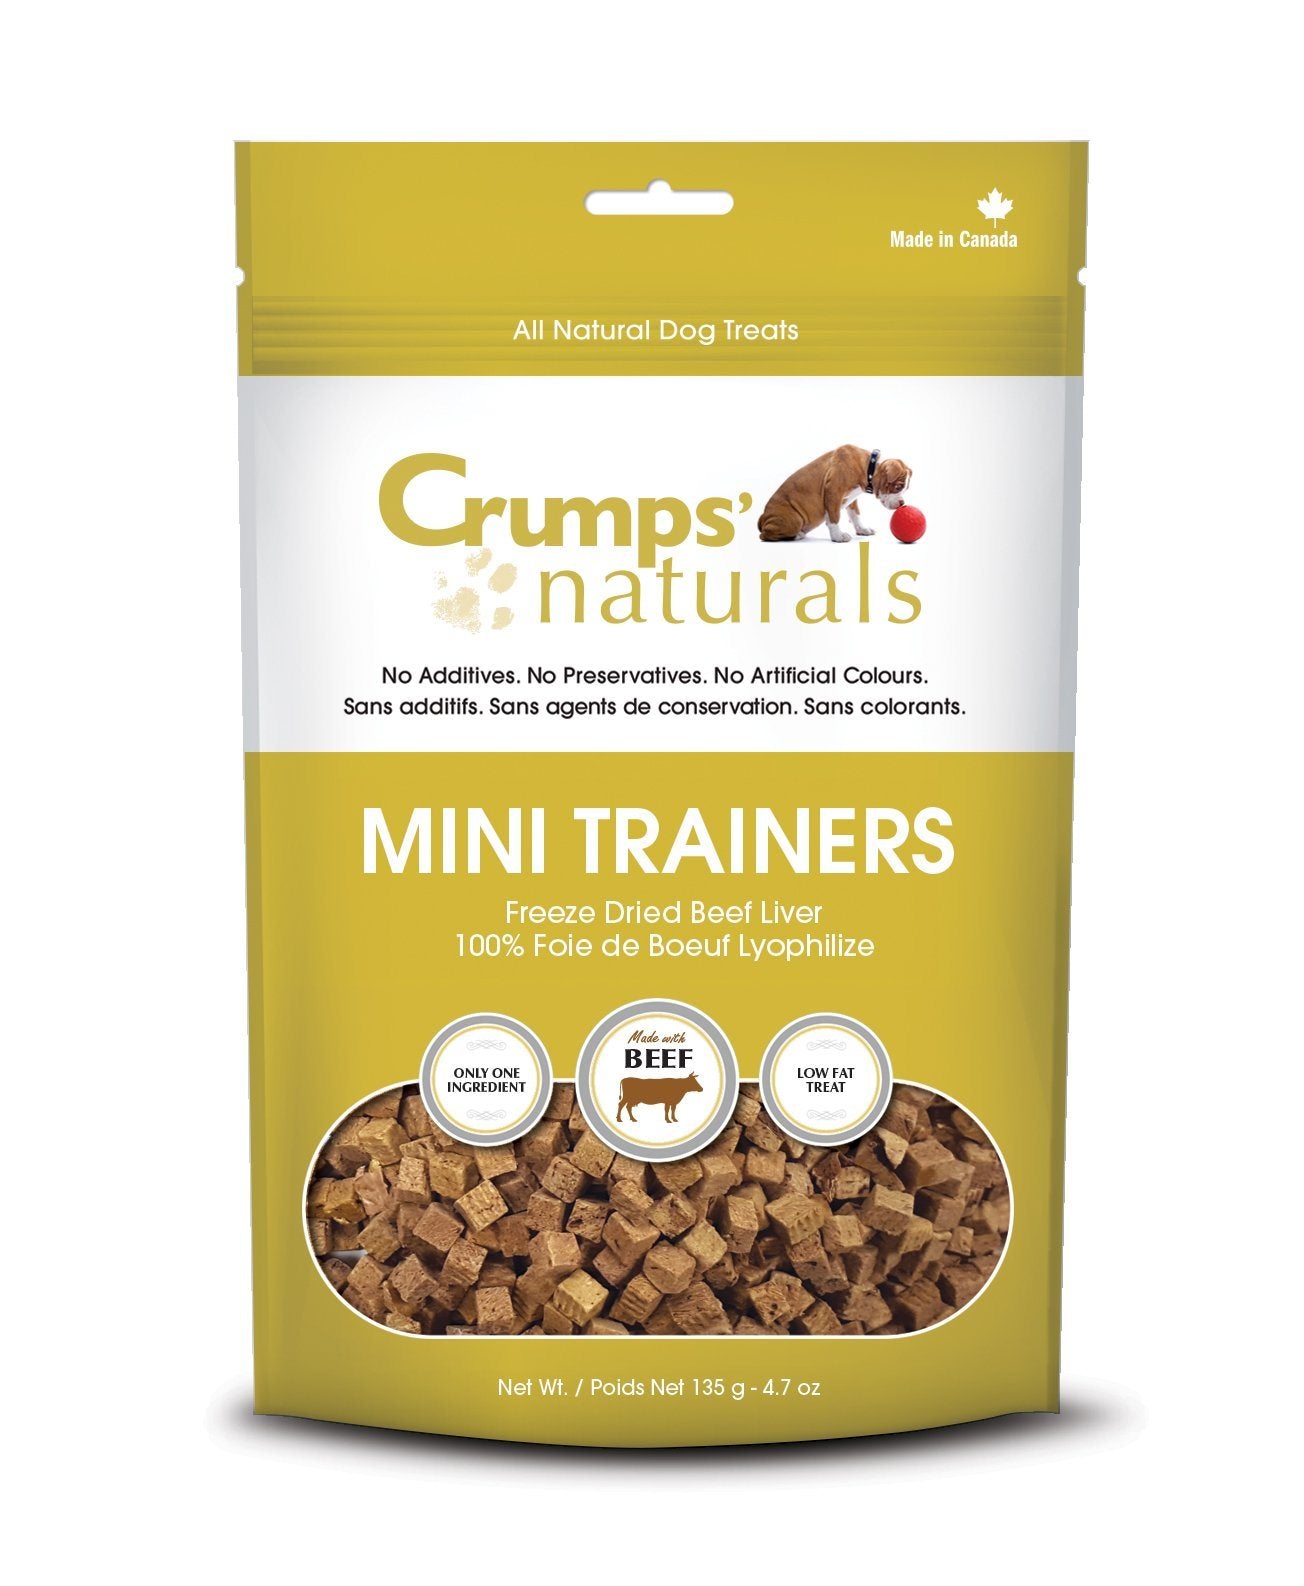 Crumps' Naturals Mini Trainers Freeze-Dried Beef Liver Freeze-Dried Dog Treats - 1.7 oz Bag  